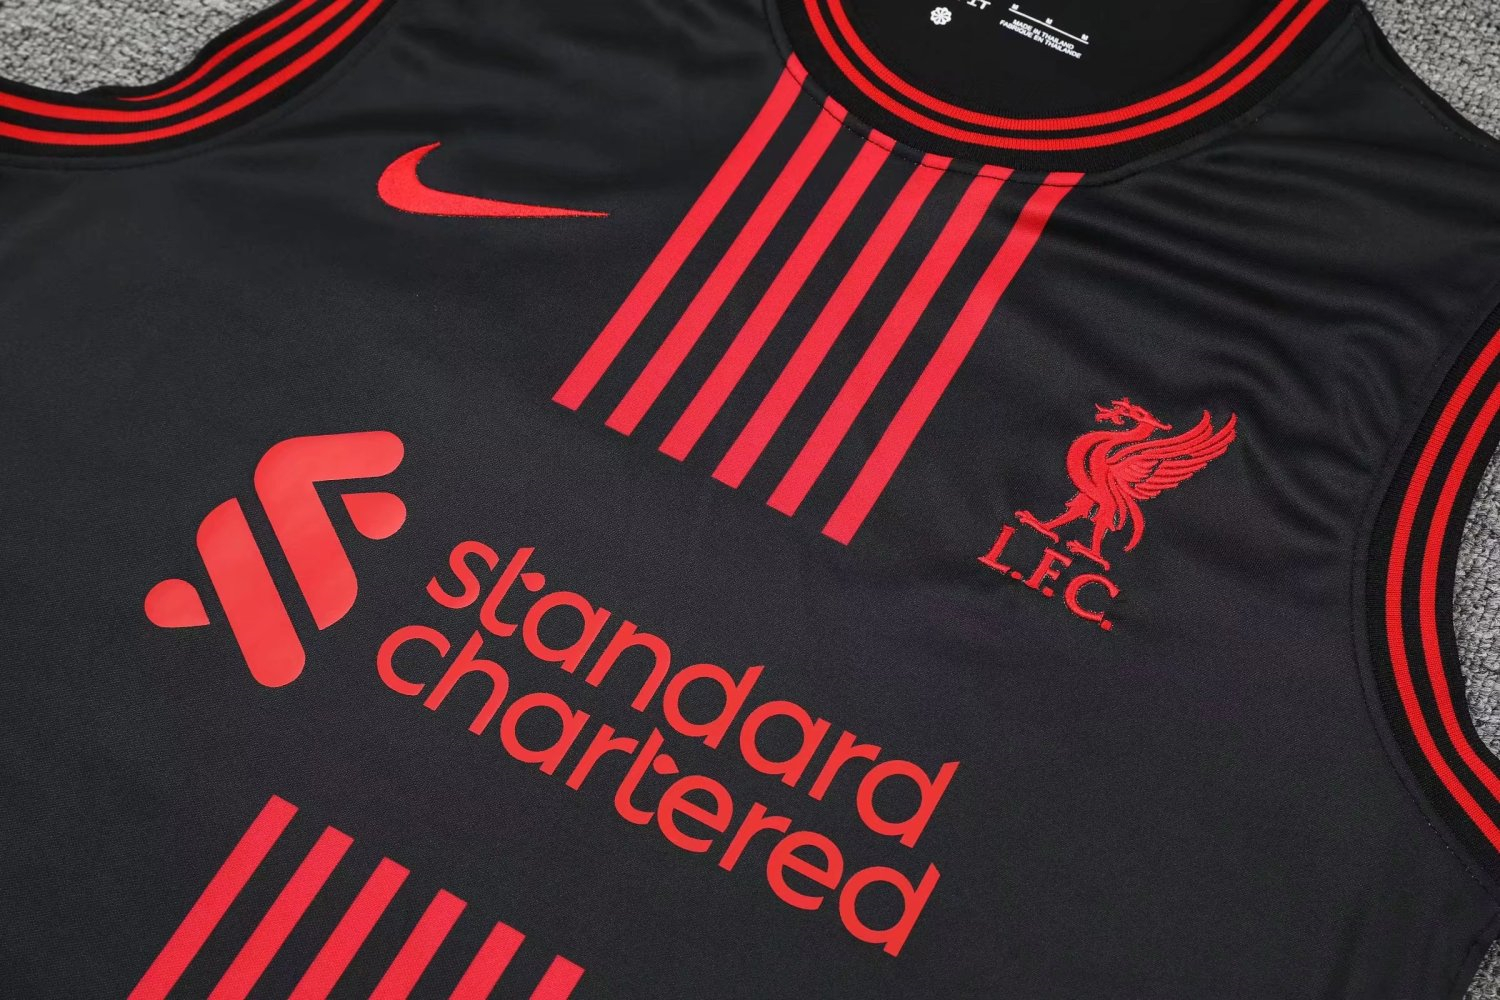 Liverpool Soccer Singlet + Short Replica Black Stripes 2022/23 Mens